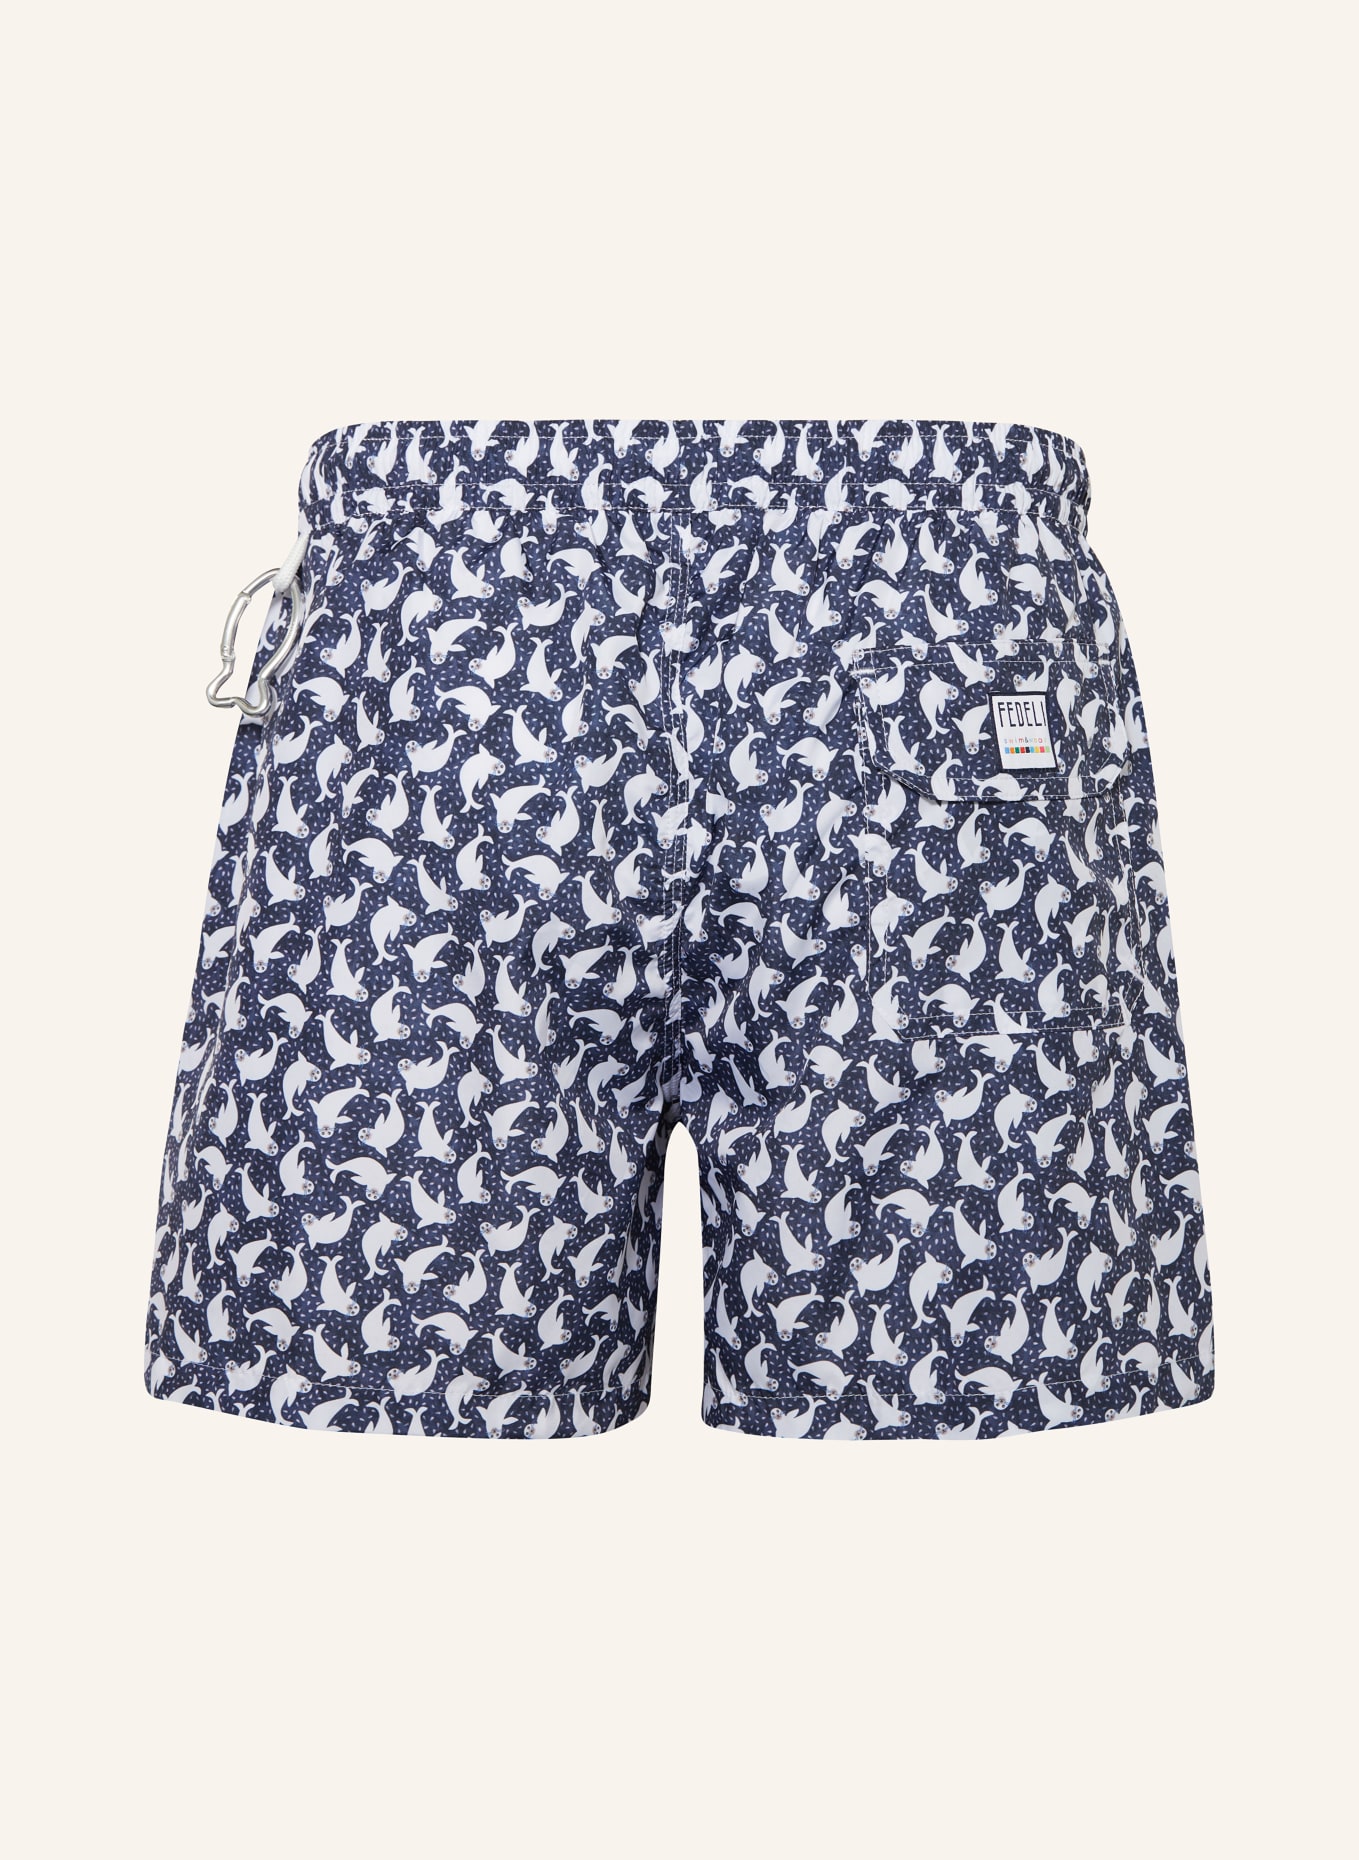 FEDELI Swim shorts, Color: DARK BLUE/ WHITE (Image 2)